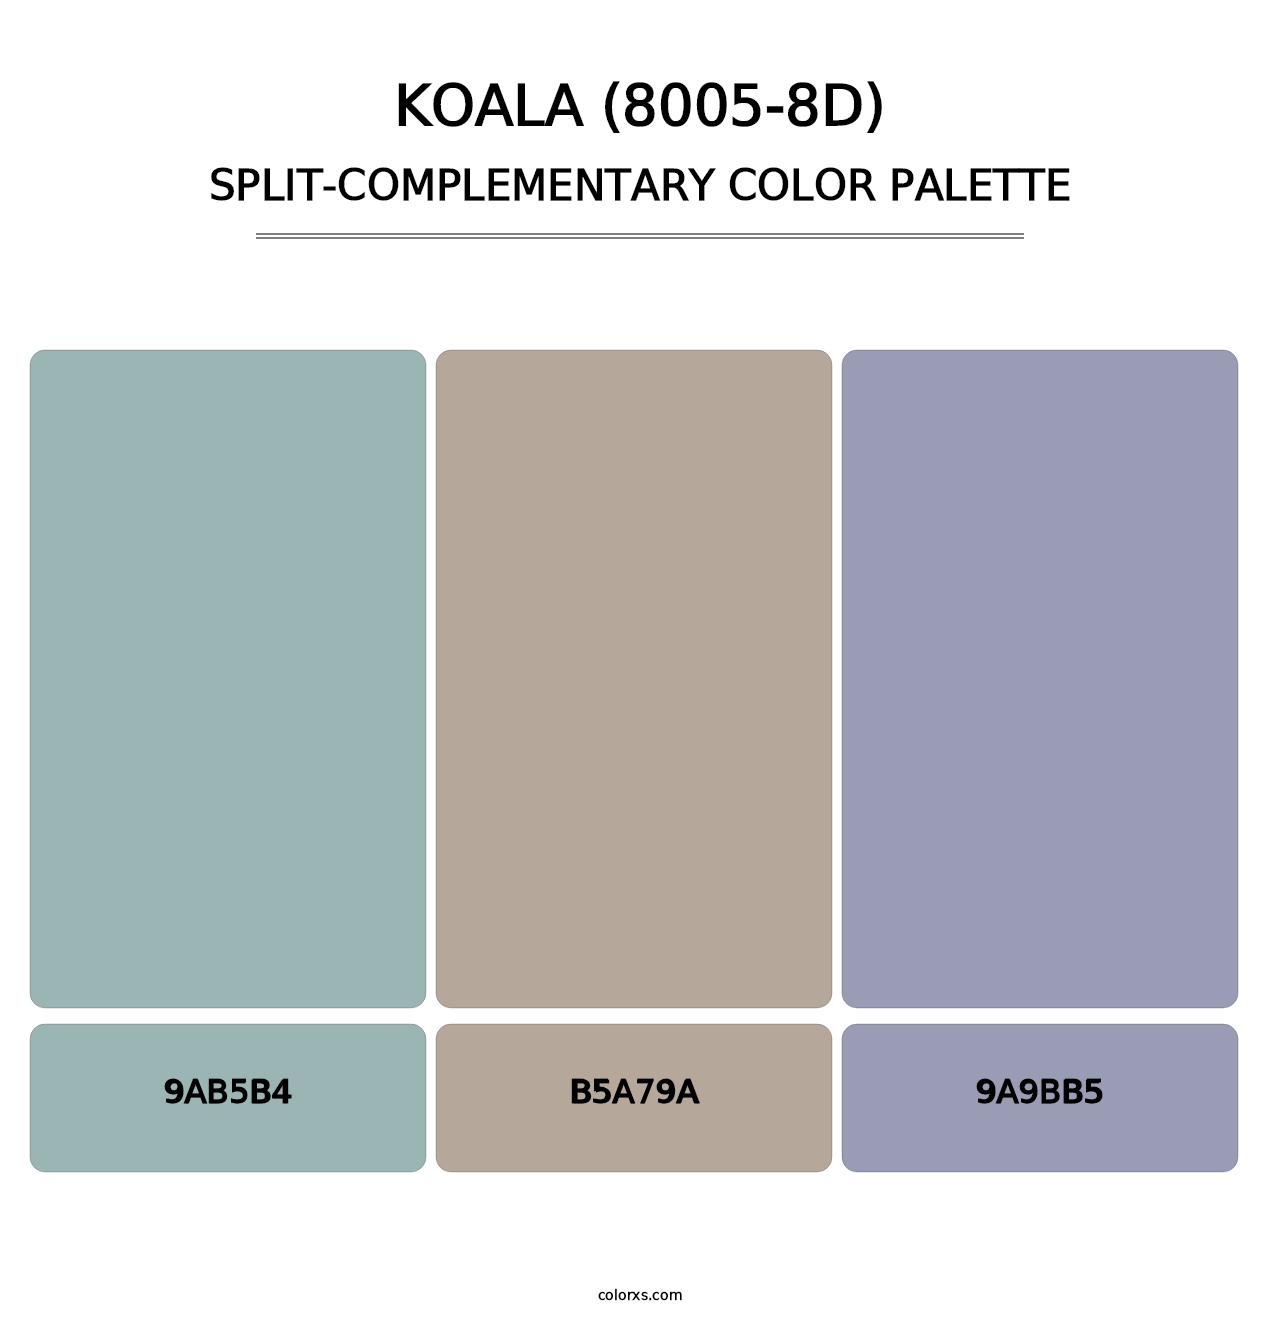 Koala (8005-8D) - Split-Complementary Color Palette